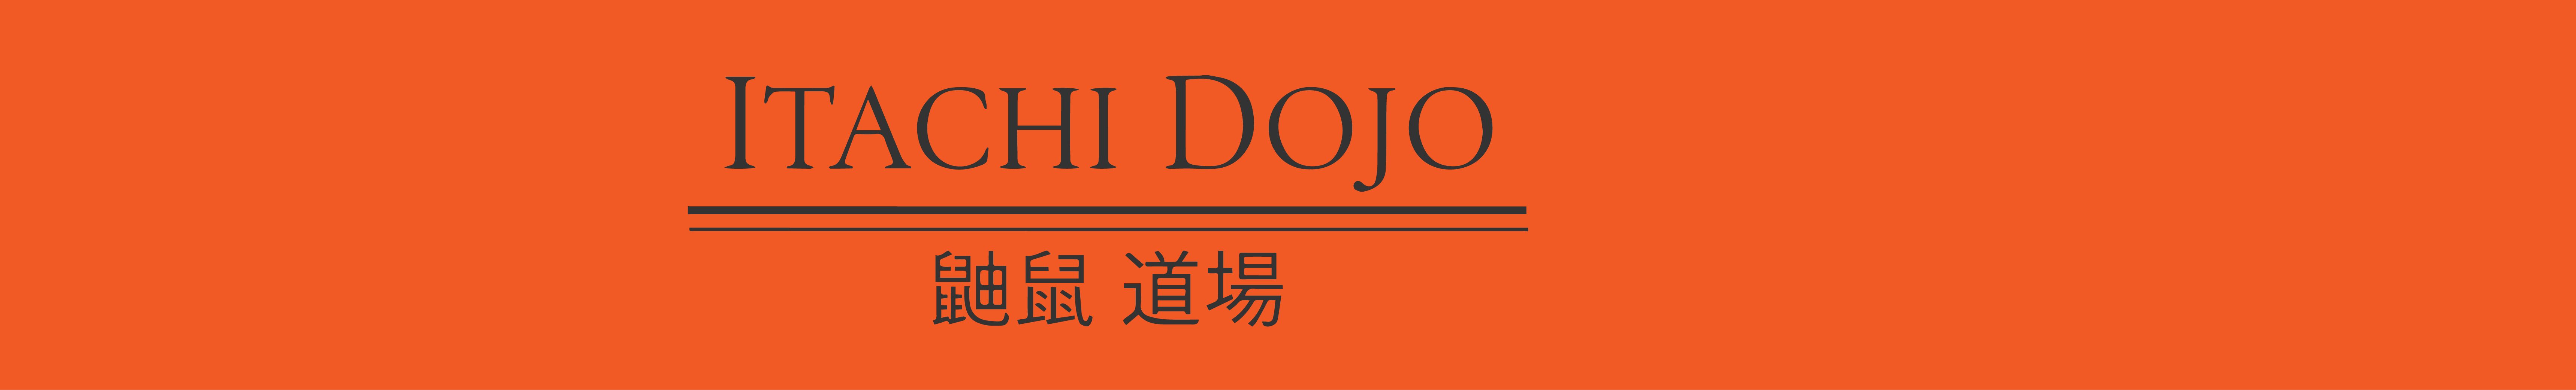 Webshop Itachi Dojo